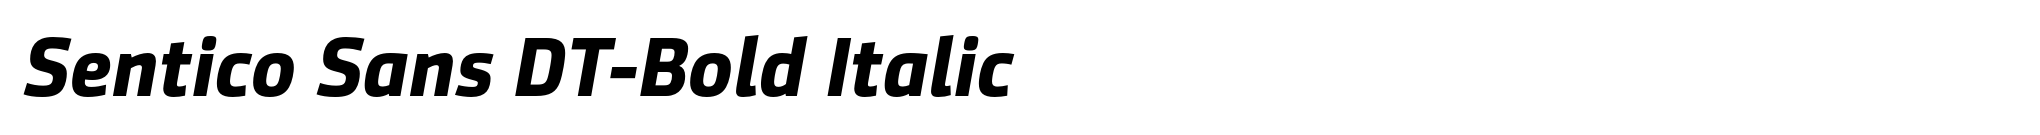 Sentico Sans DT-Bold Italic image